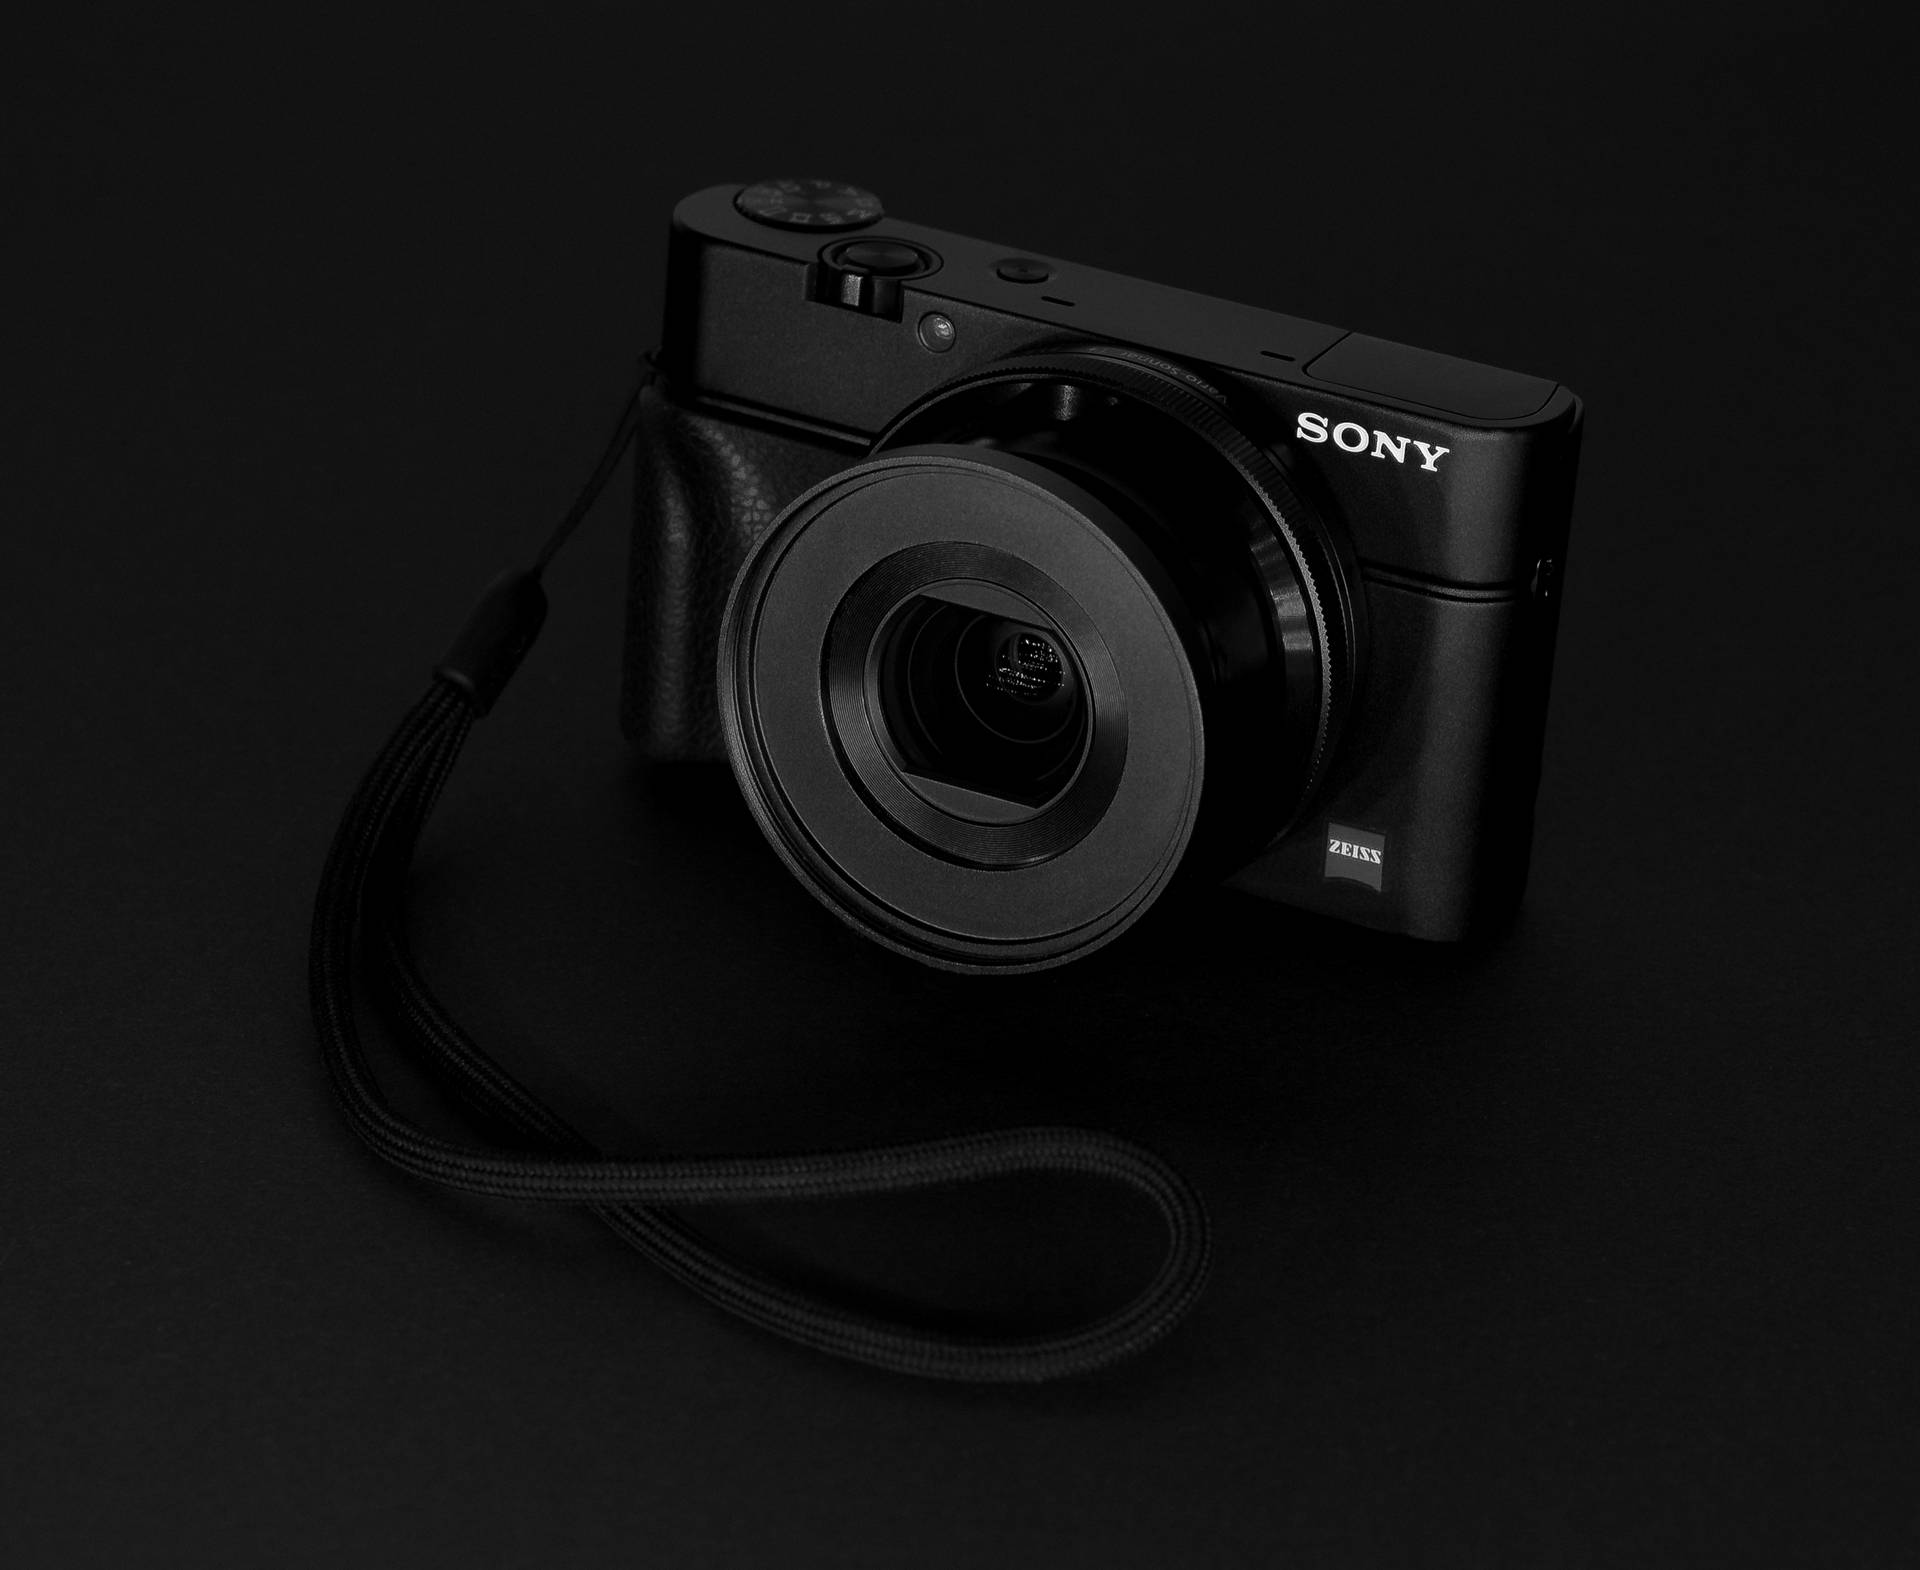 Sony Digital Camera Black Background